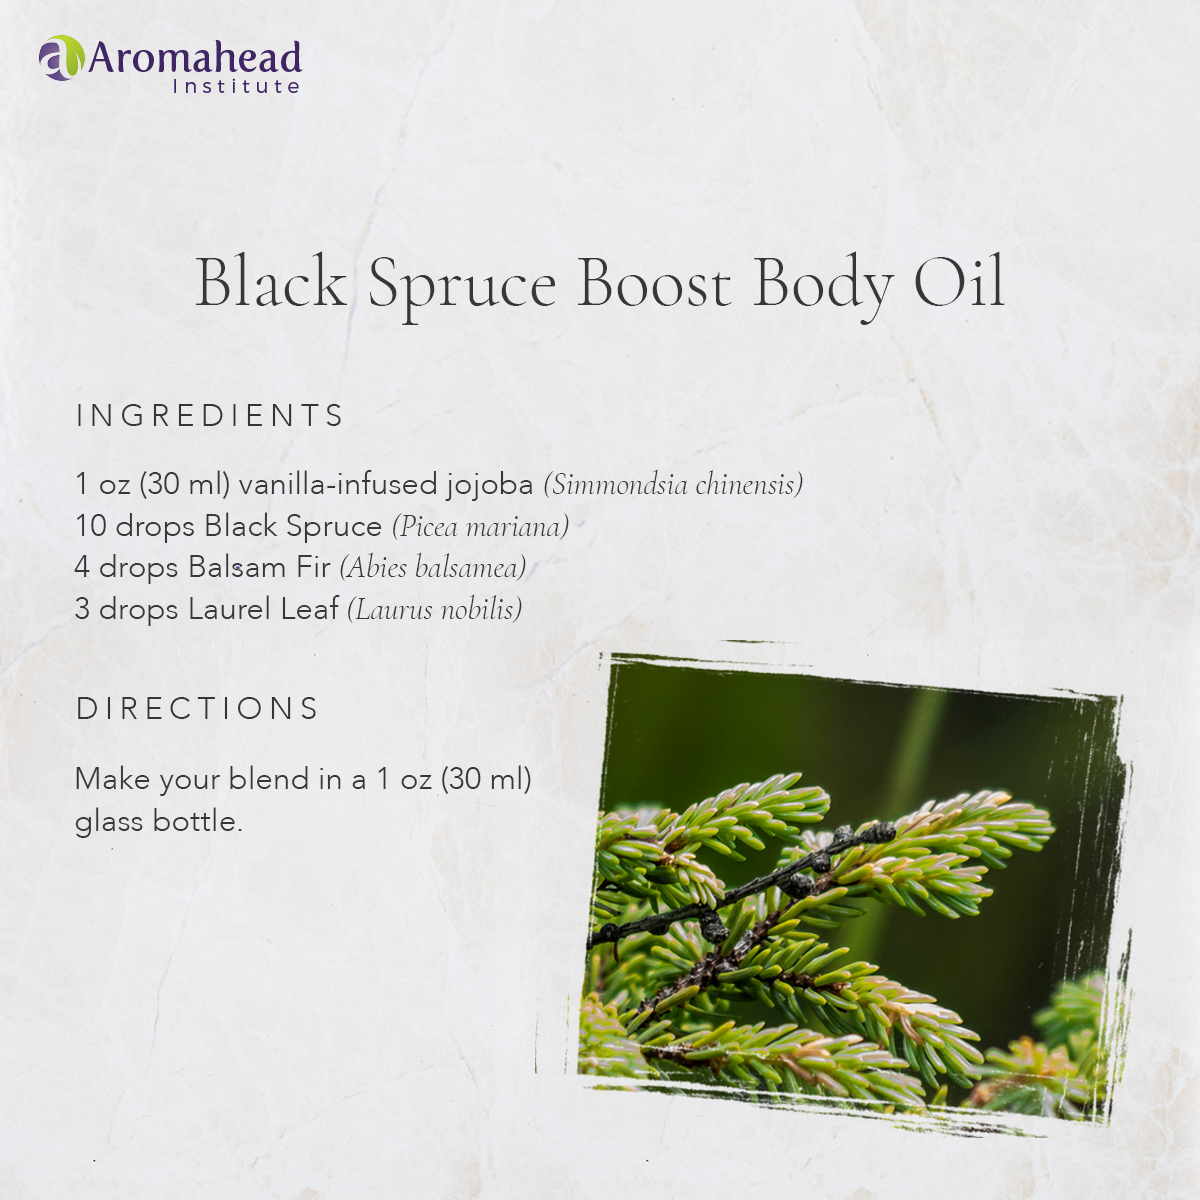 Black Spruce Boost Body Oil